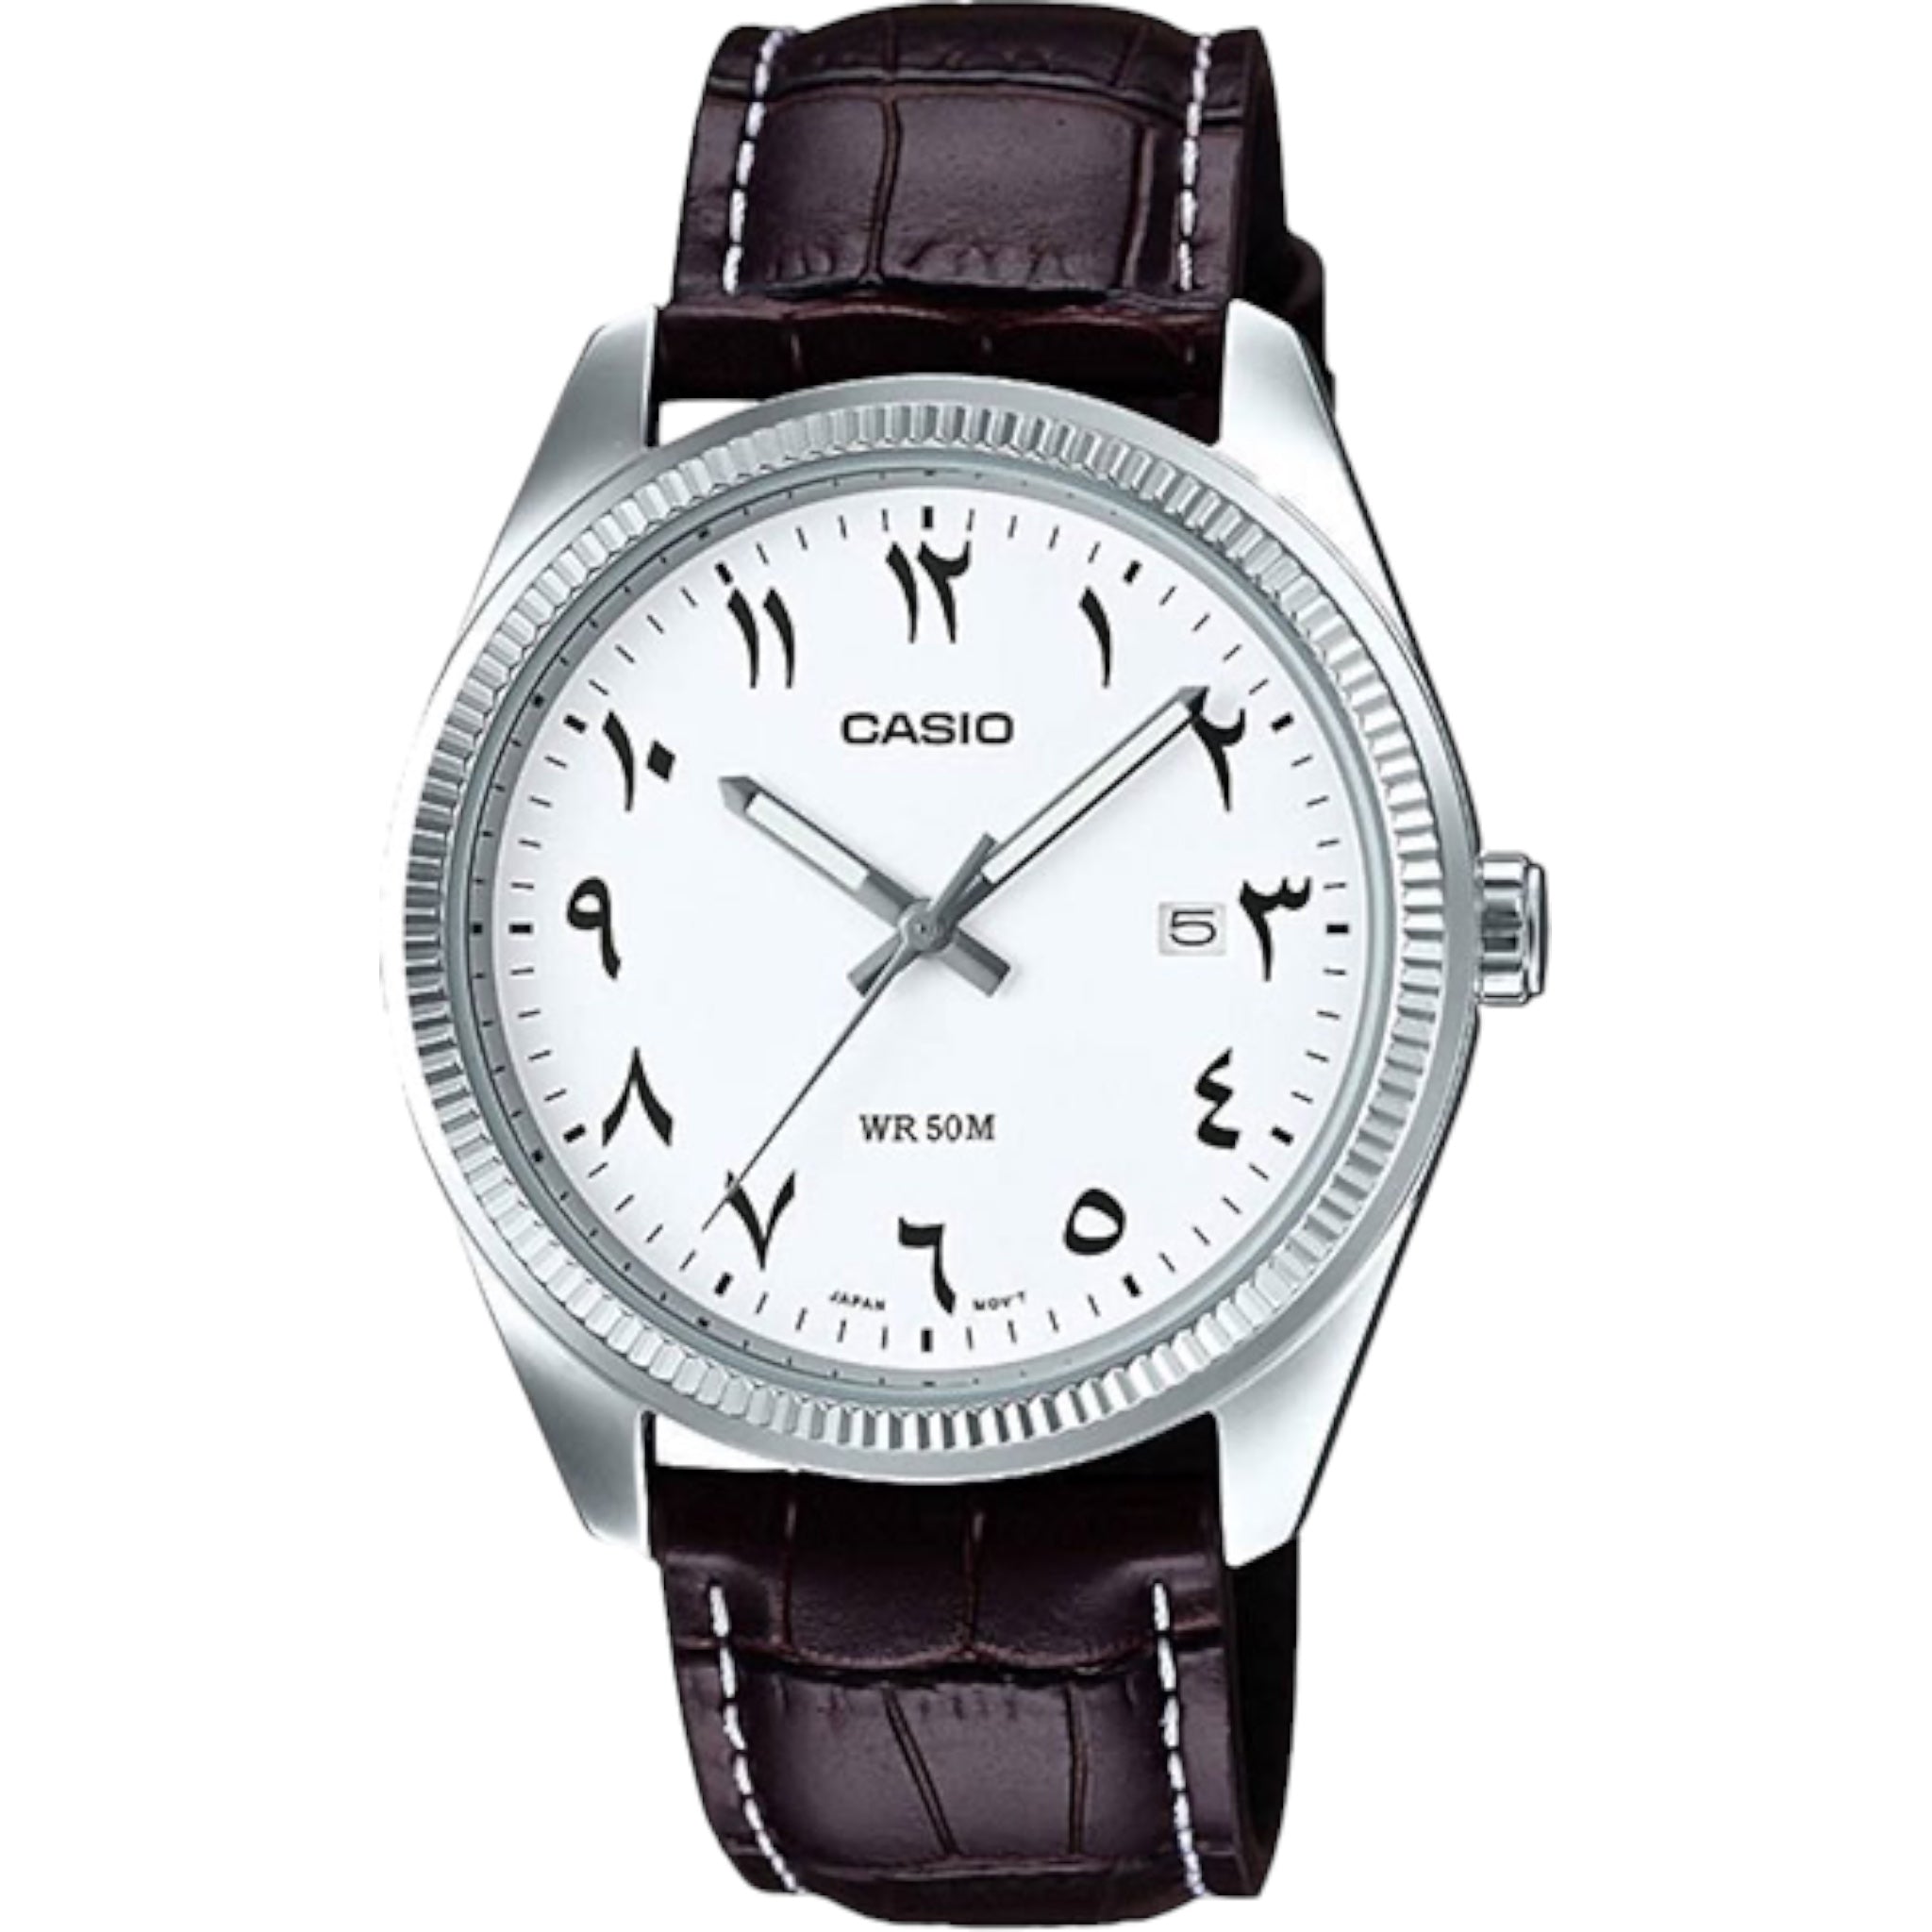 Casio Arabic Dial Men's Watch MTP-1302L-7B3 Leather